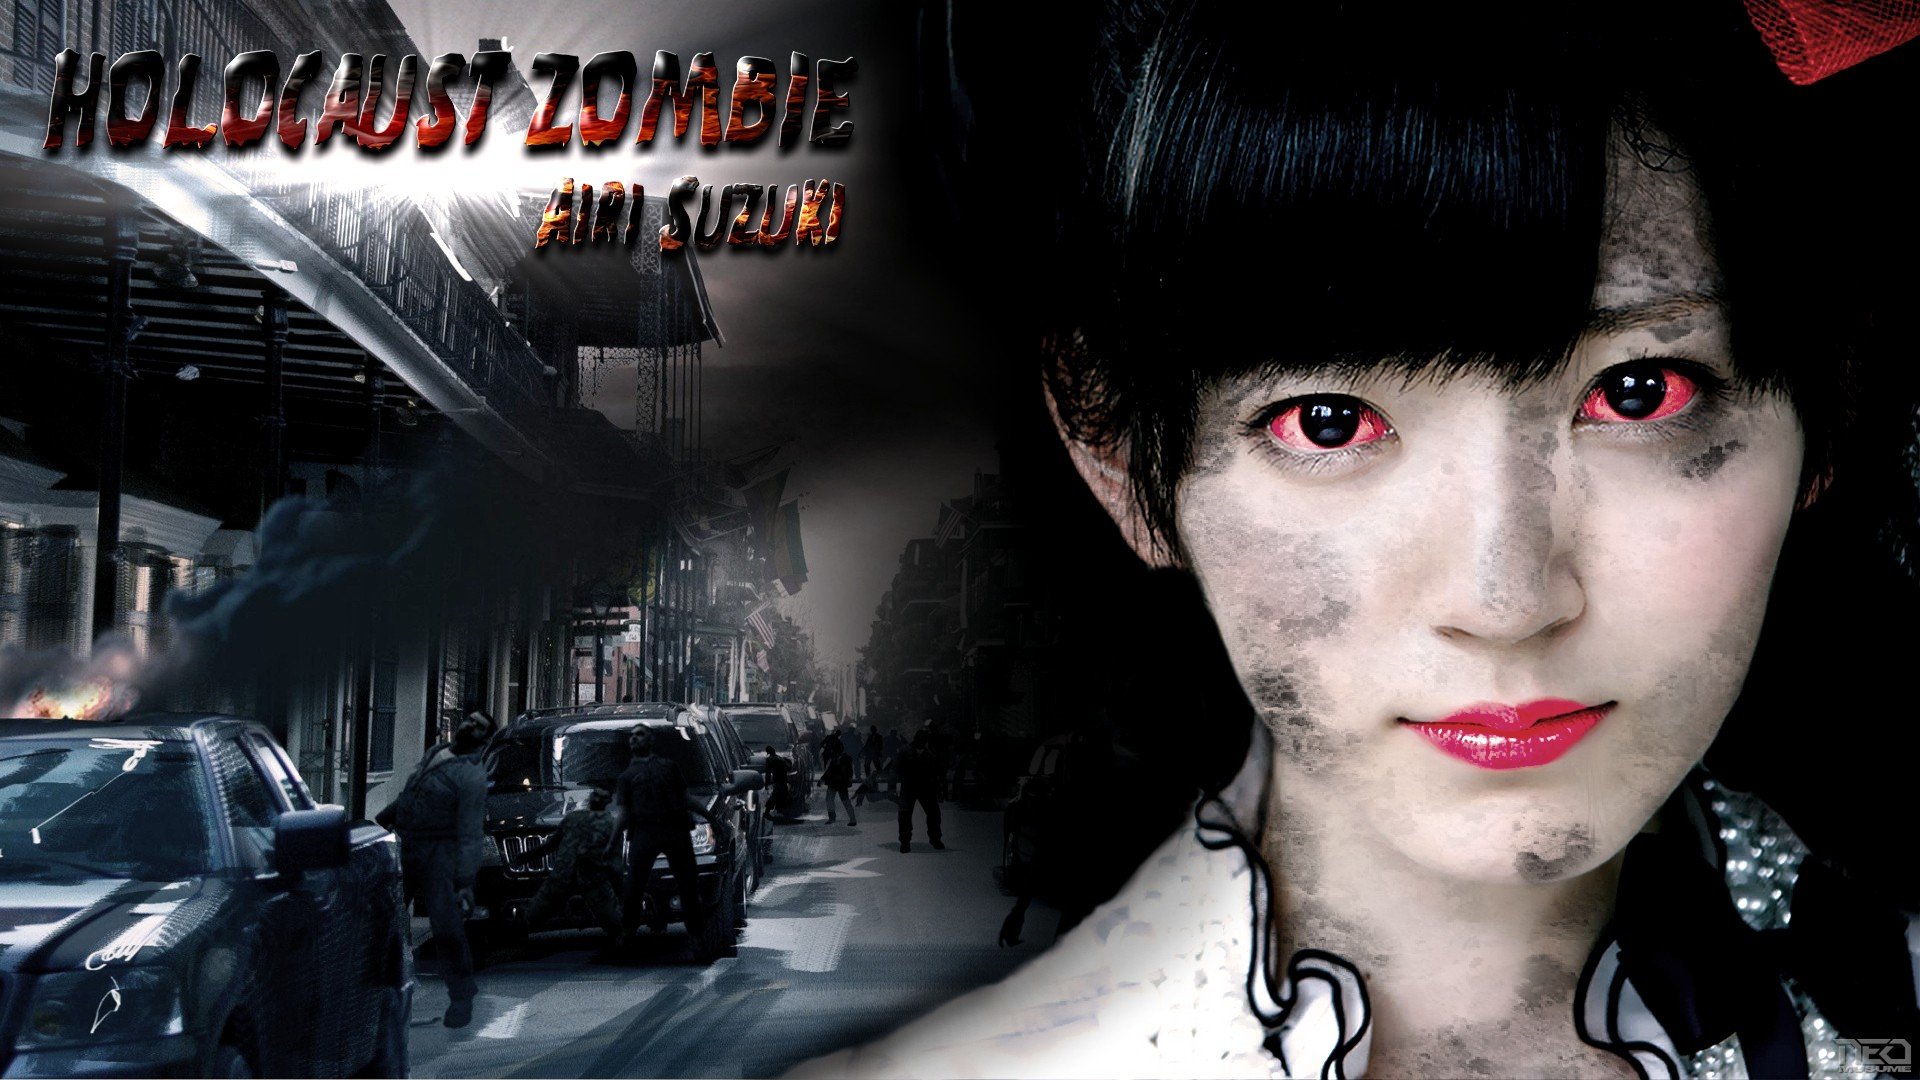 Holocaust zombie horror dark asian girl wallpaper | 1920x1080 ...